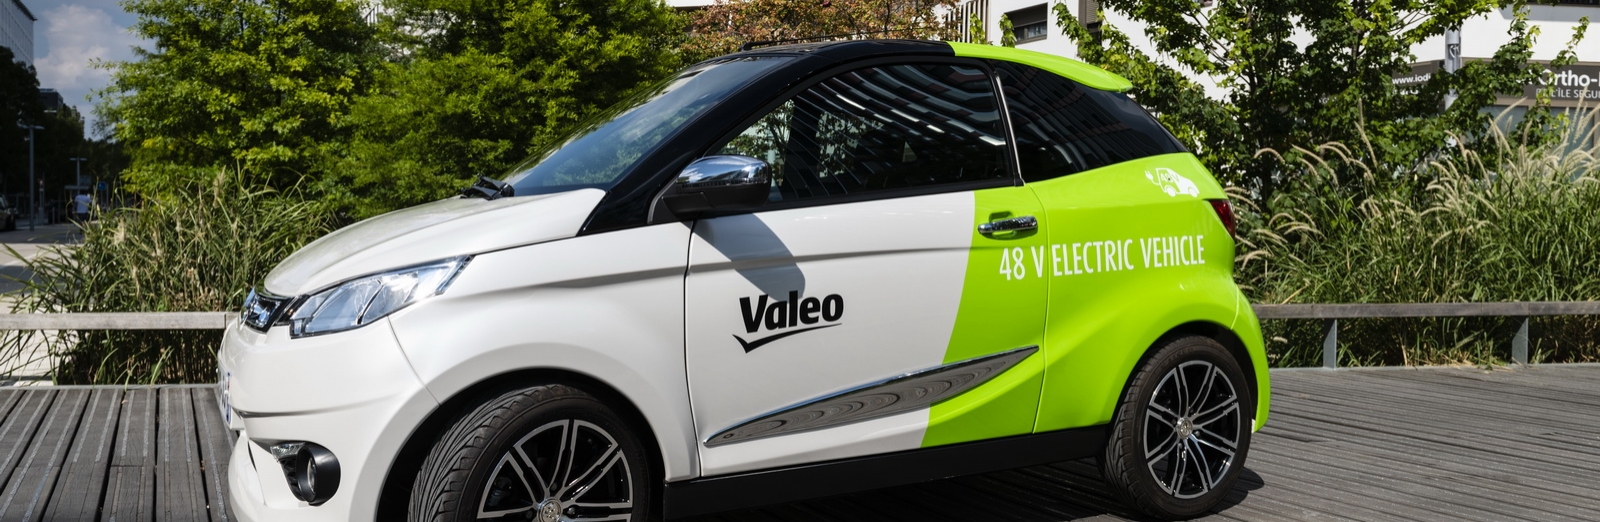 Valeo 48V electric vehicle portrait